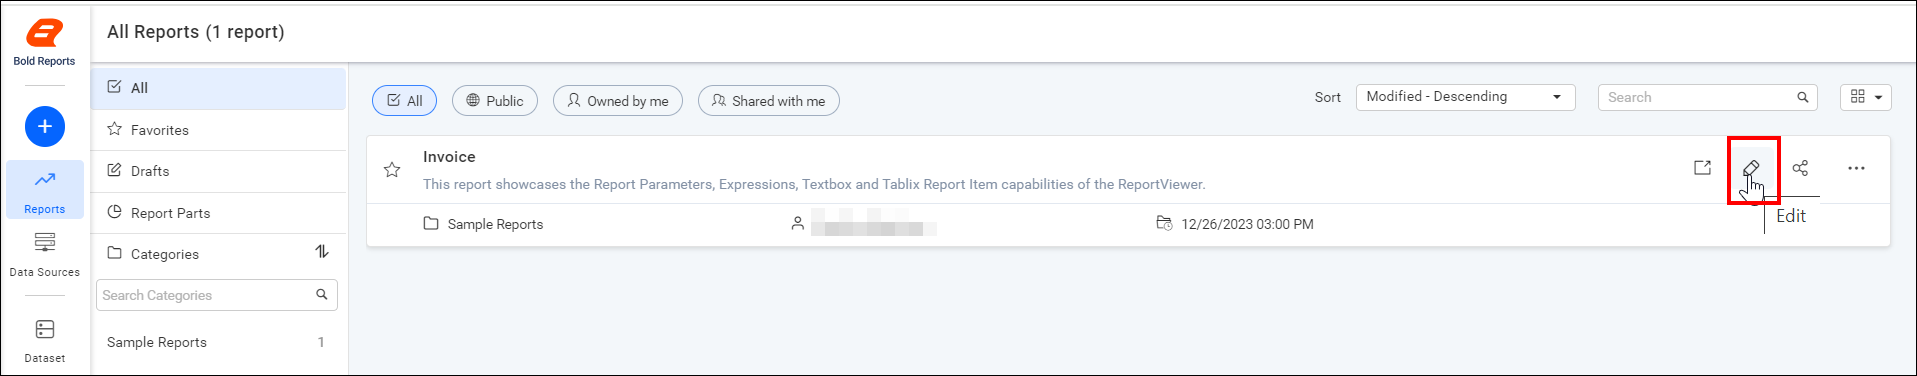 Edit report in Report Designer